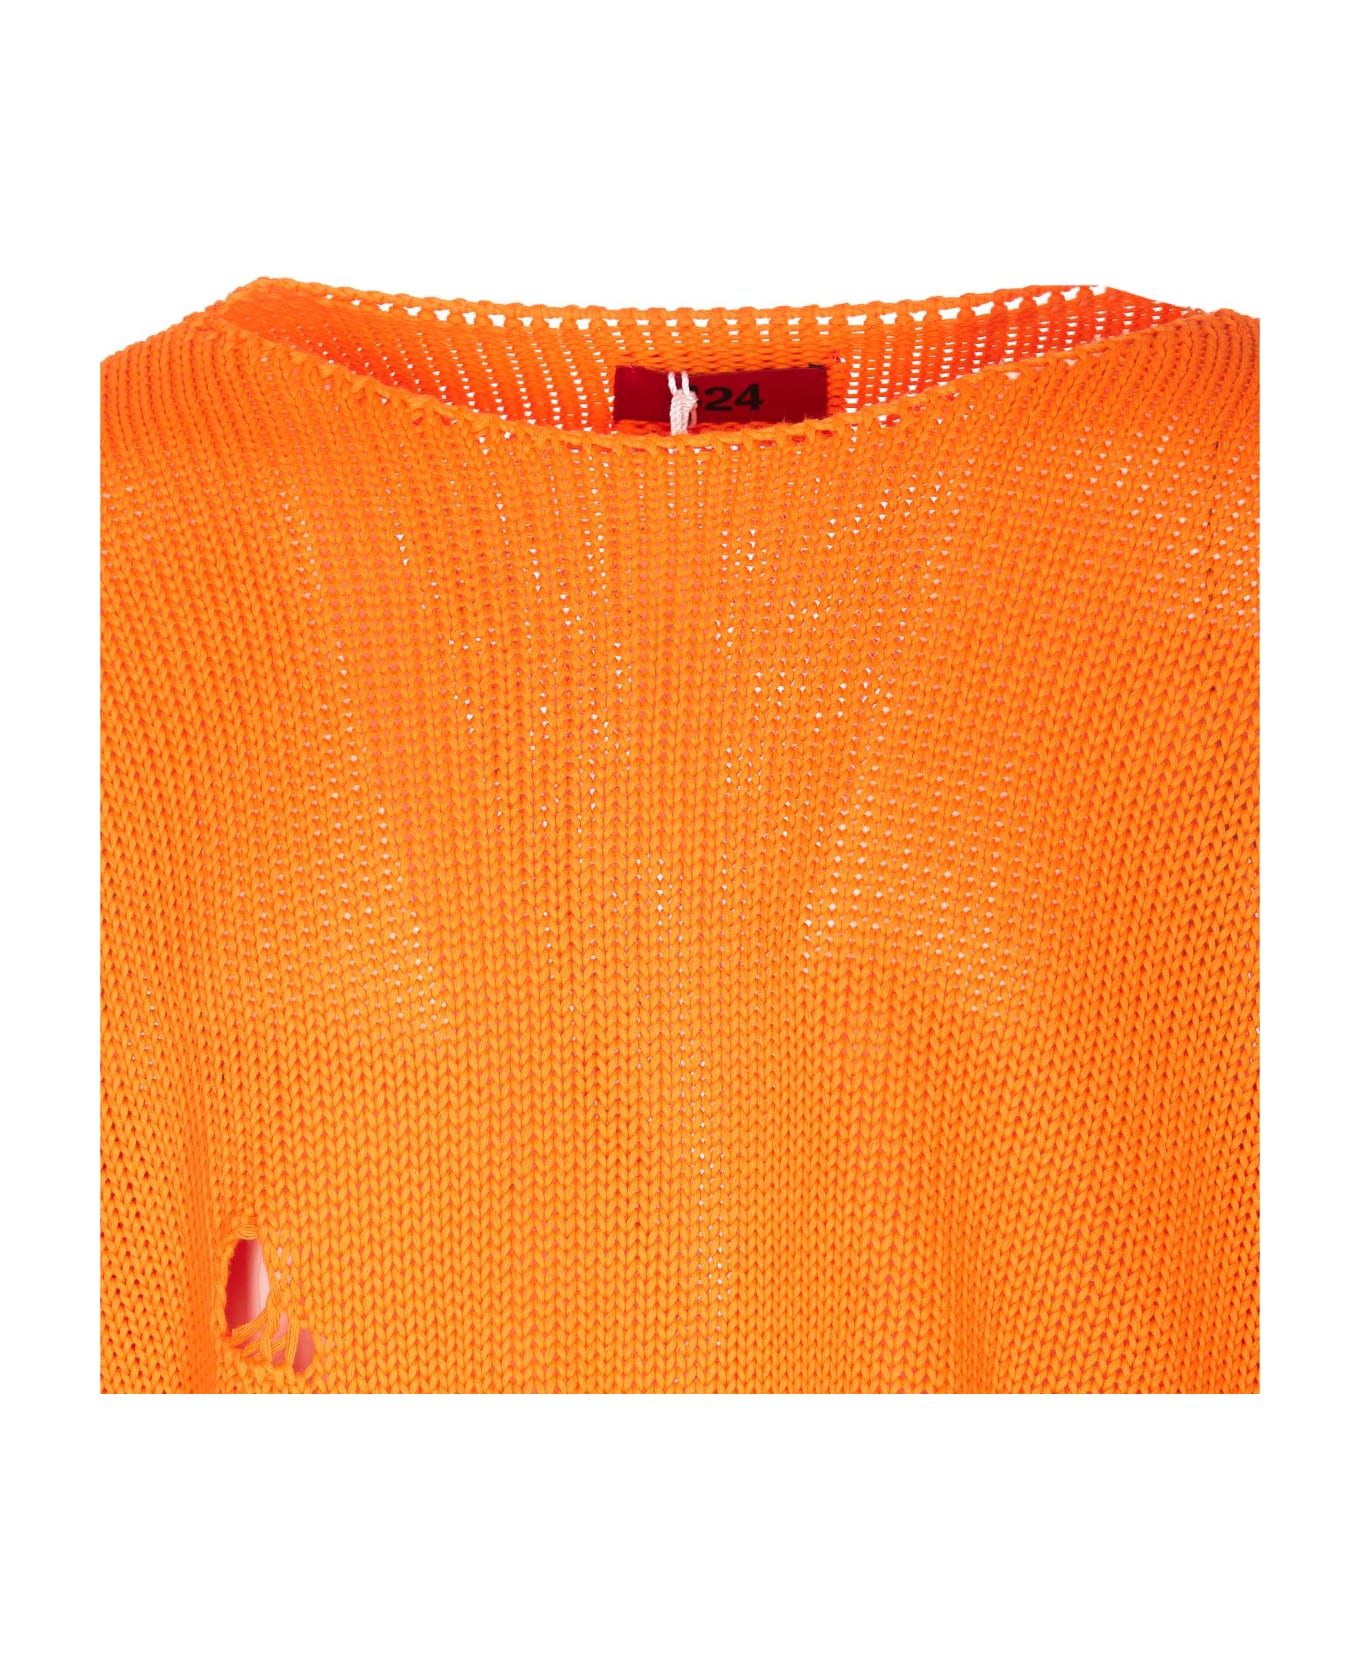 FourTwoFour on Fairfax Distressed Sweater - Orange ニットウェア